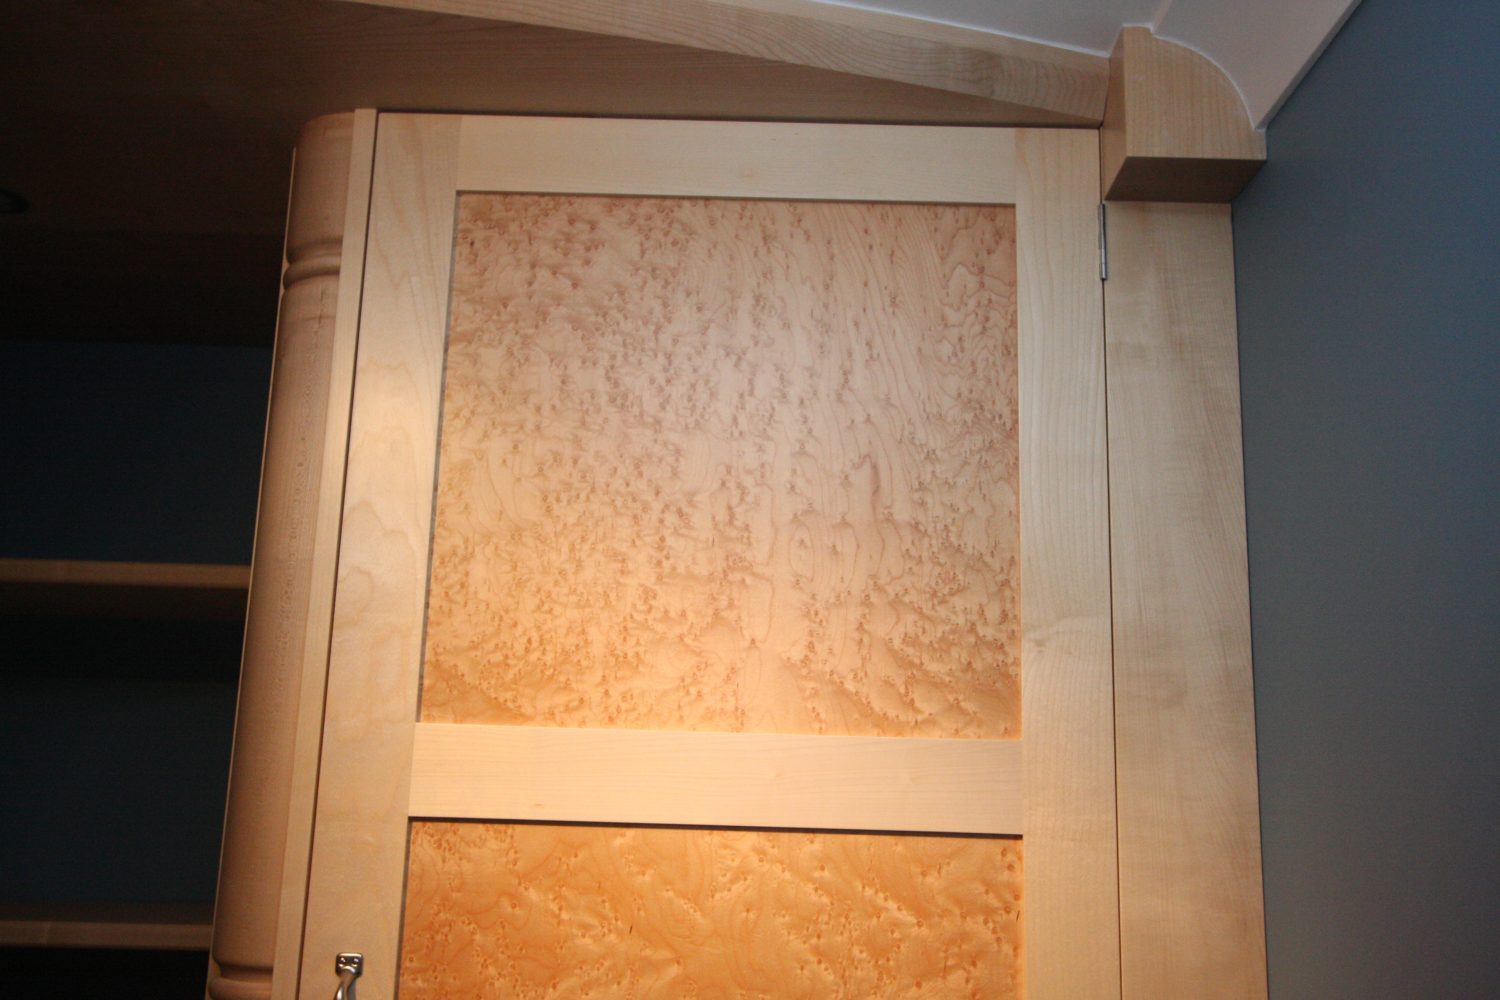 Birds-Eye Maple Door Panels in a Sycamore Frame